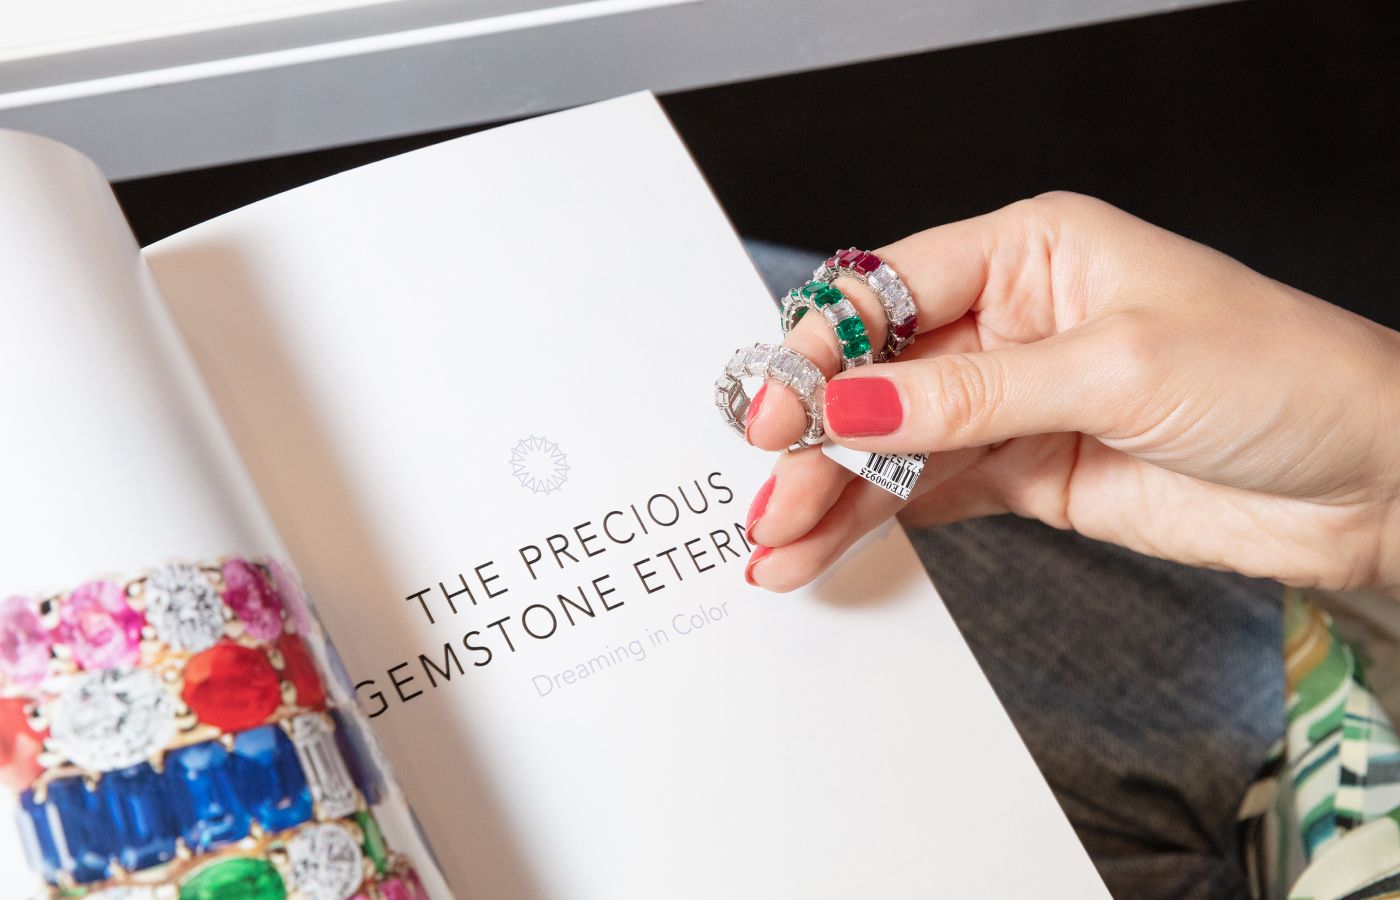 ARAZI eternity rings with emerald-cut diamonds, emeralds and rubies